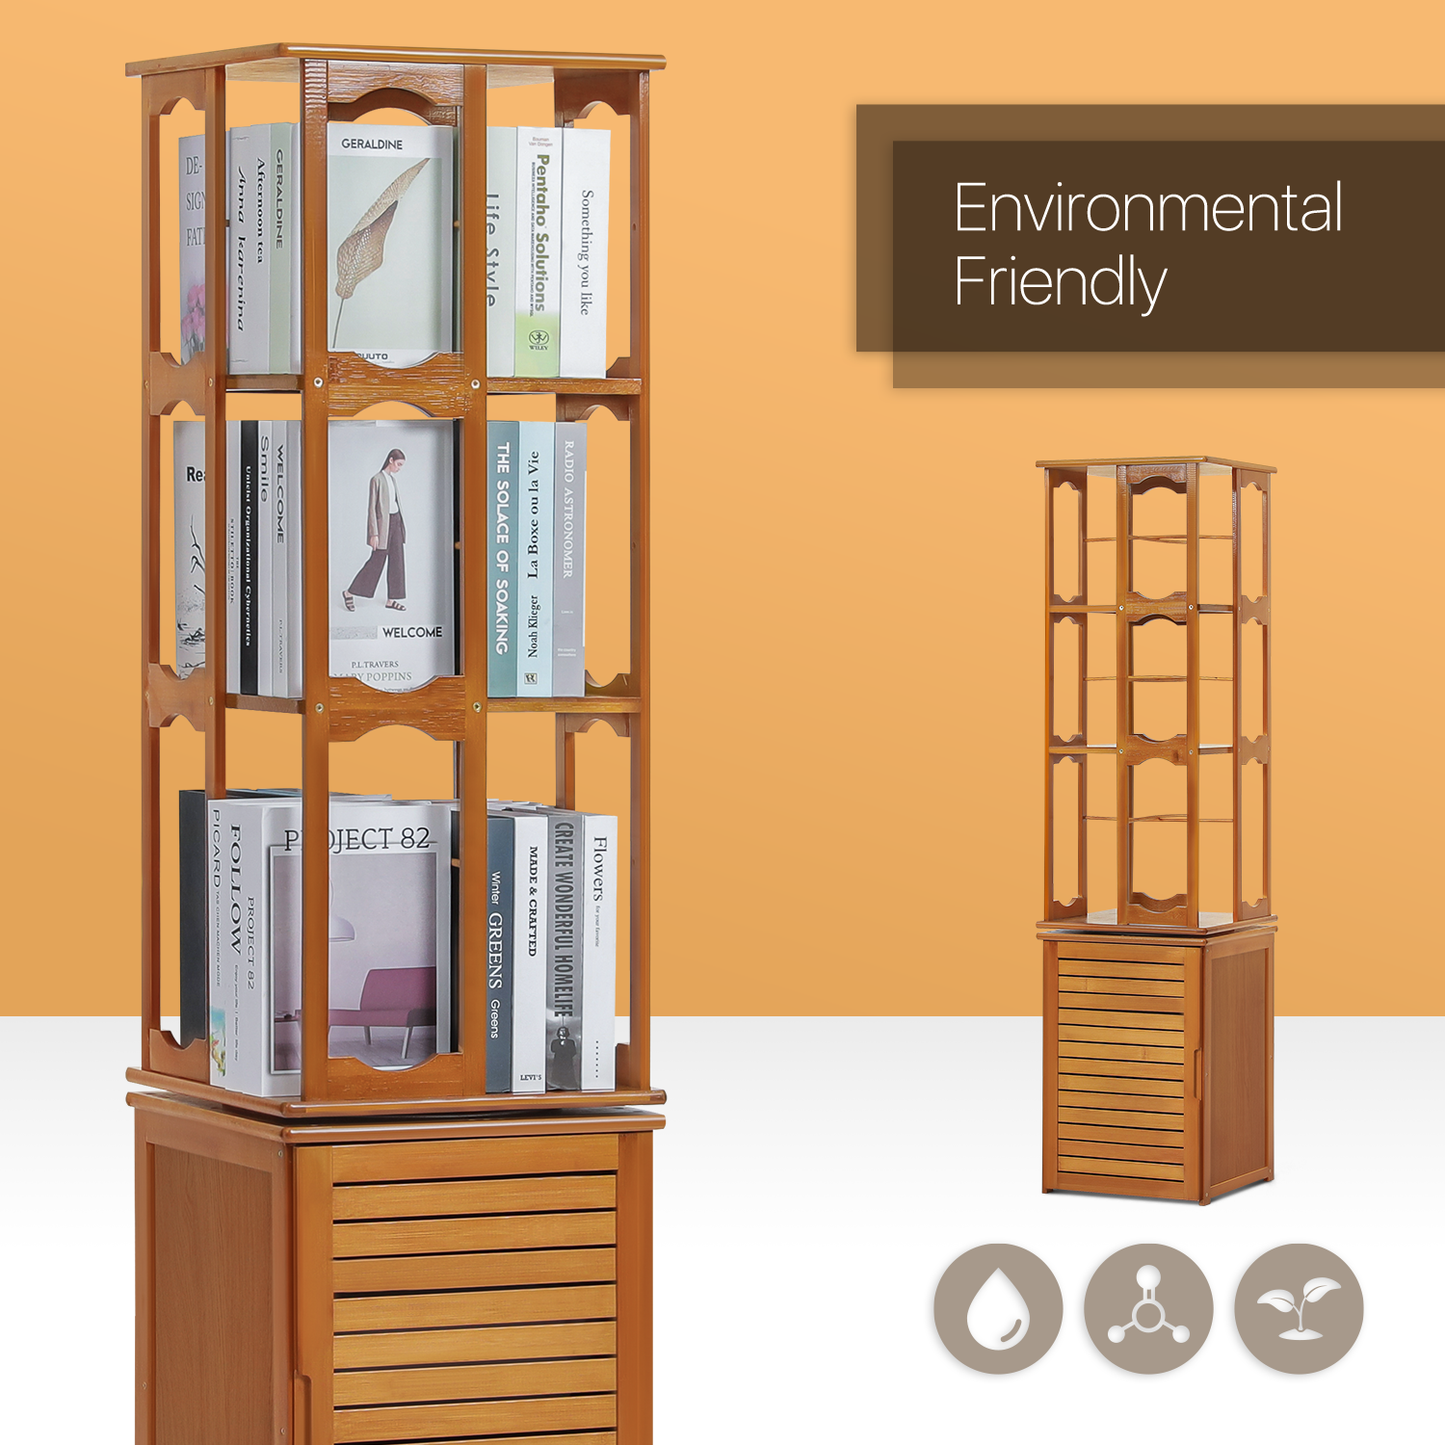 360° Swivel Bookshelf - Oval Hollow Pattern - with Bottom Cabinet Storage - 15" - Brown